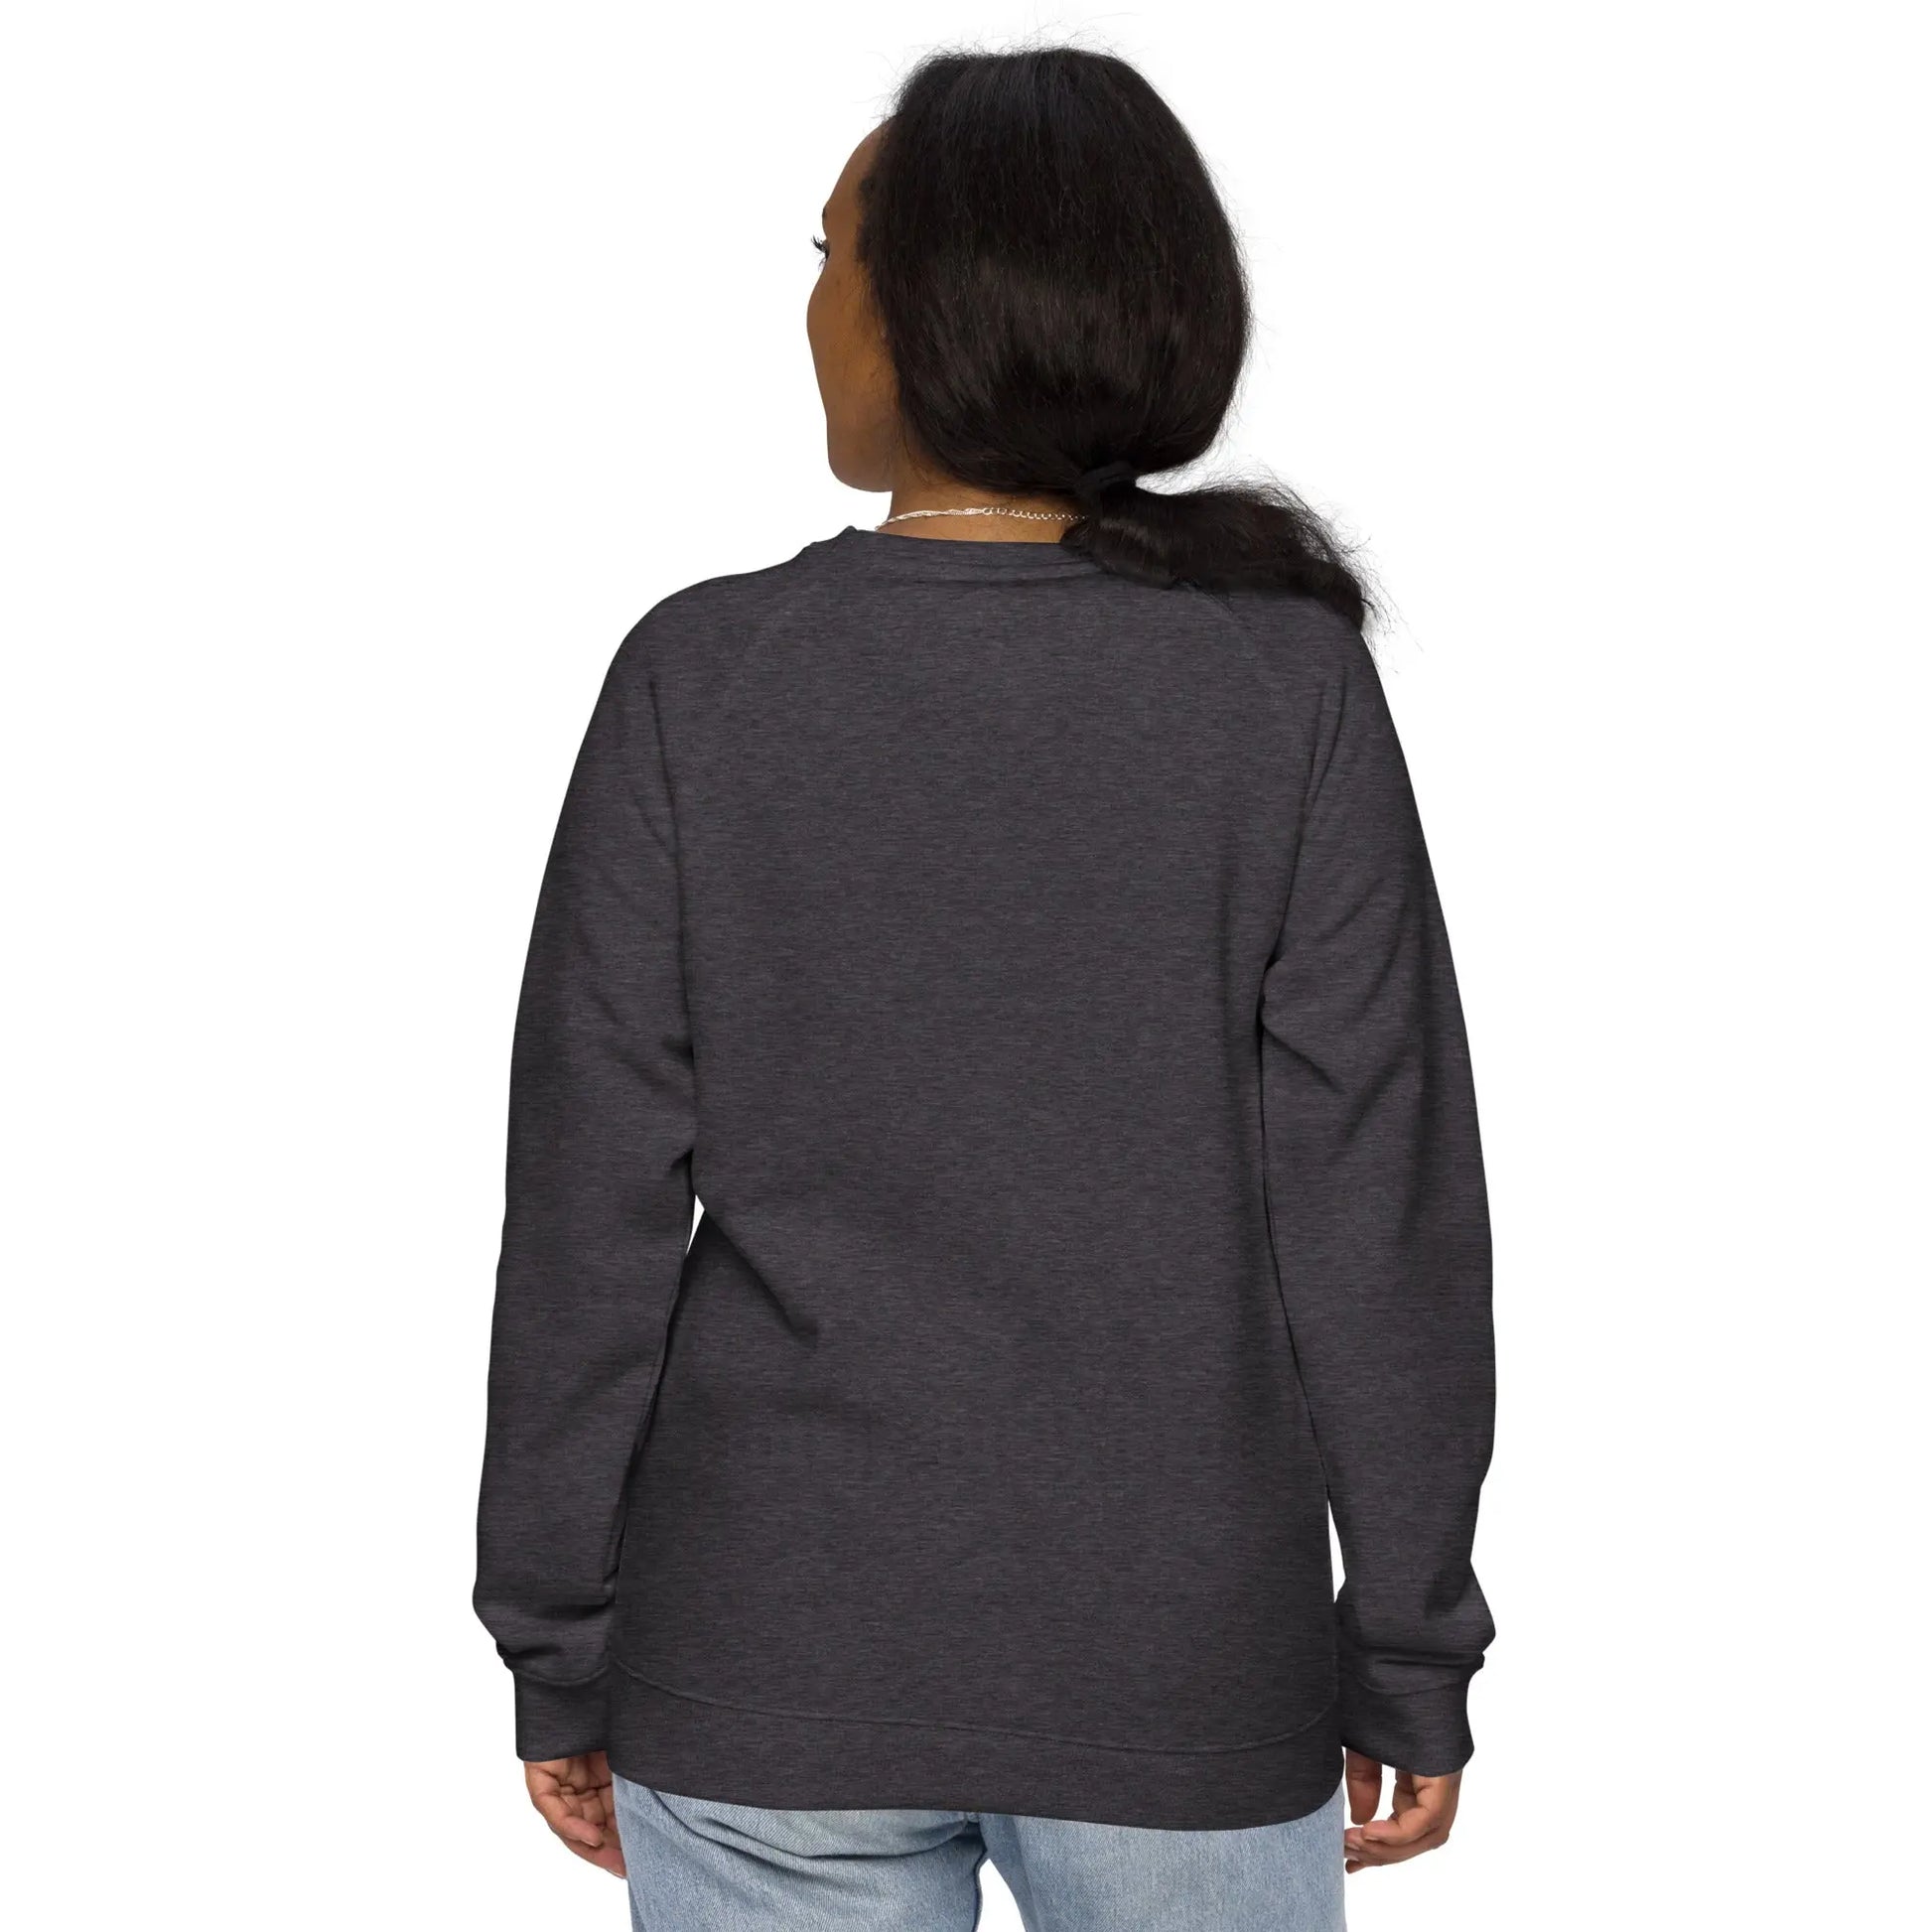 Unisex organic raglan sweatshirt - Image #8